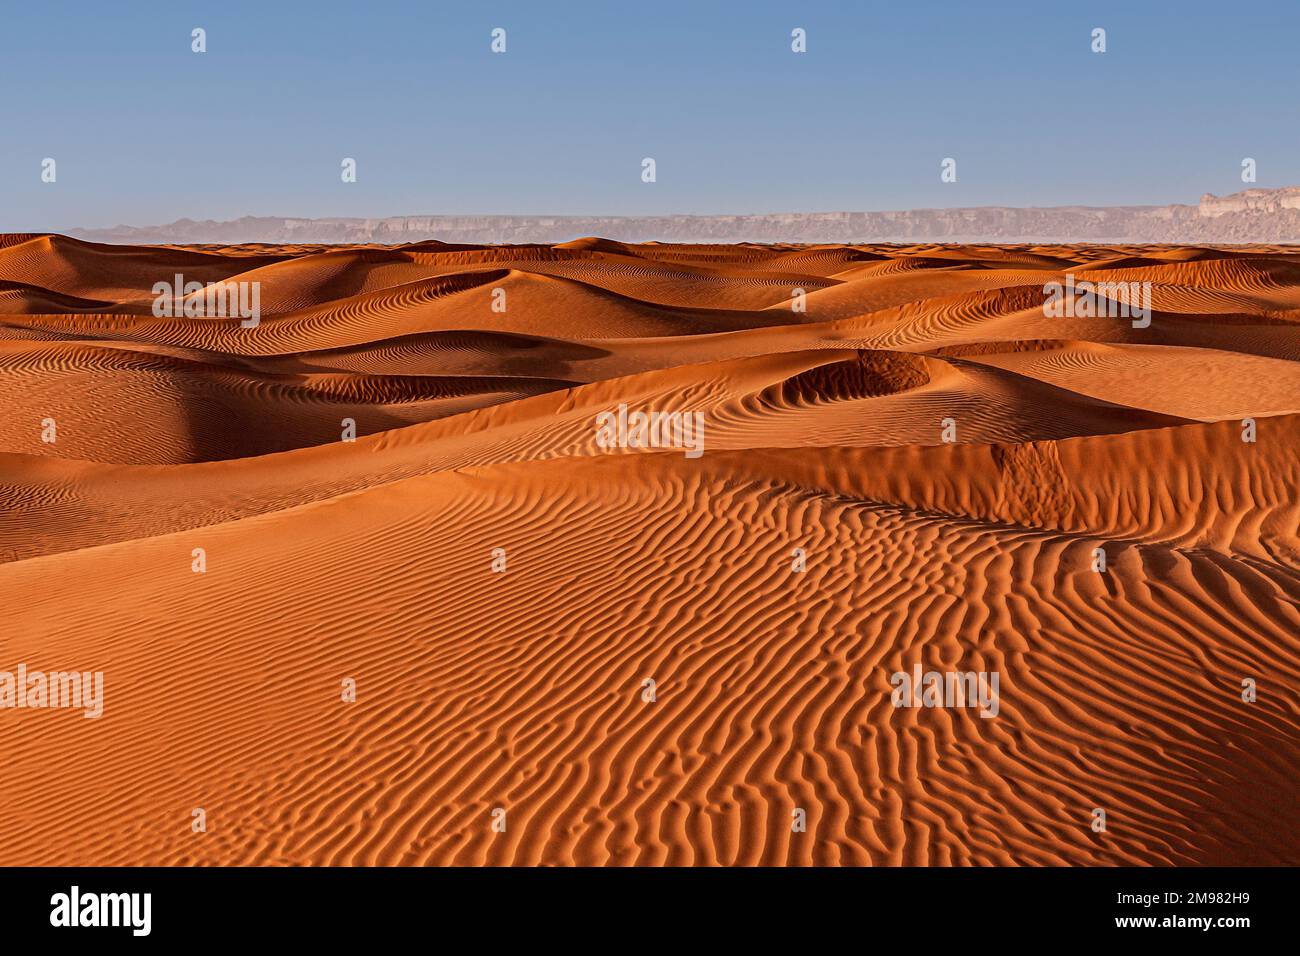 Rippled sand dunes in desert landscape with mountain backdrop, Saudi Arabia Stock Photo